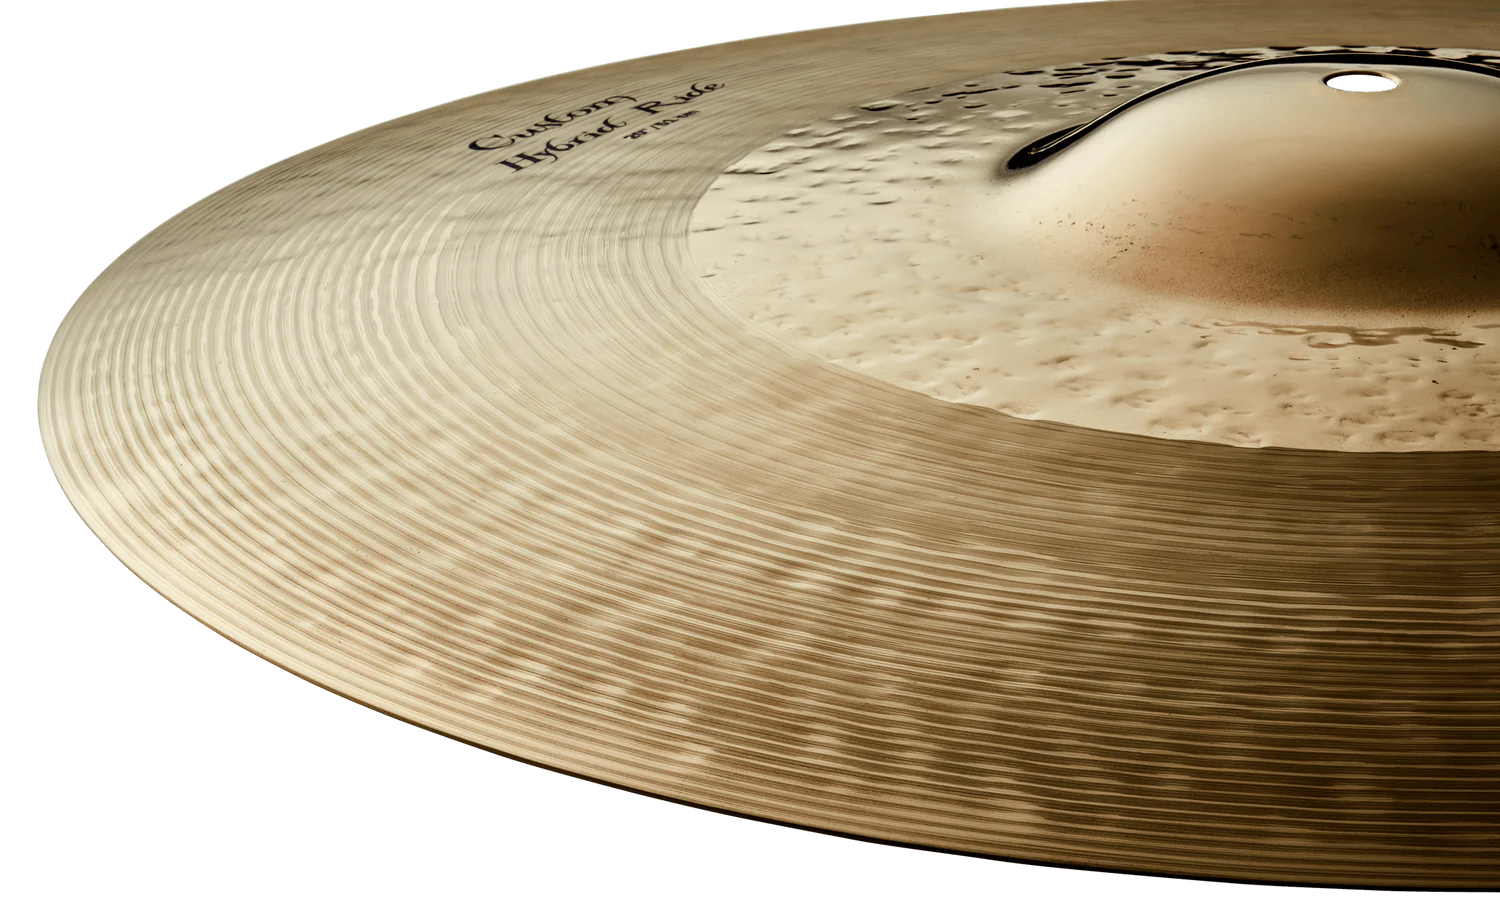 Zildjian K Custom K0998 20" Hybrid Ride Cymbal